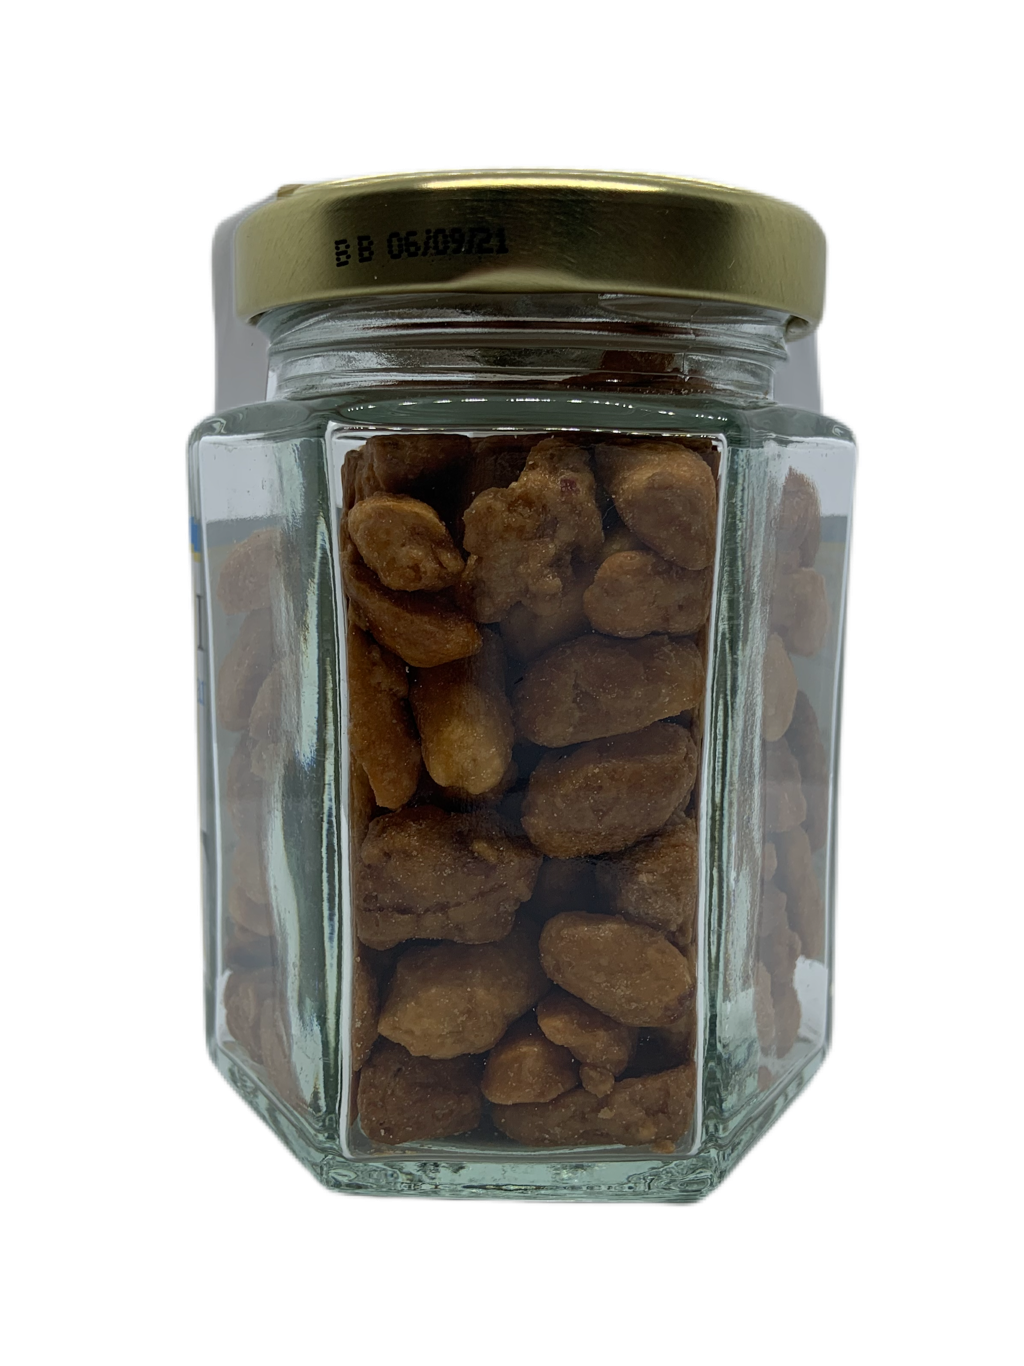 Caramelised Peanuts Hexagonal Jar - The Dormen Food Company